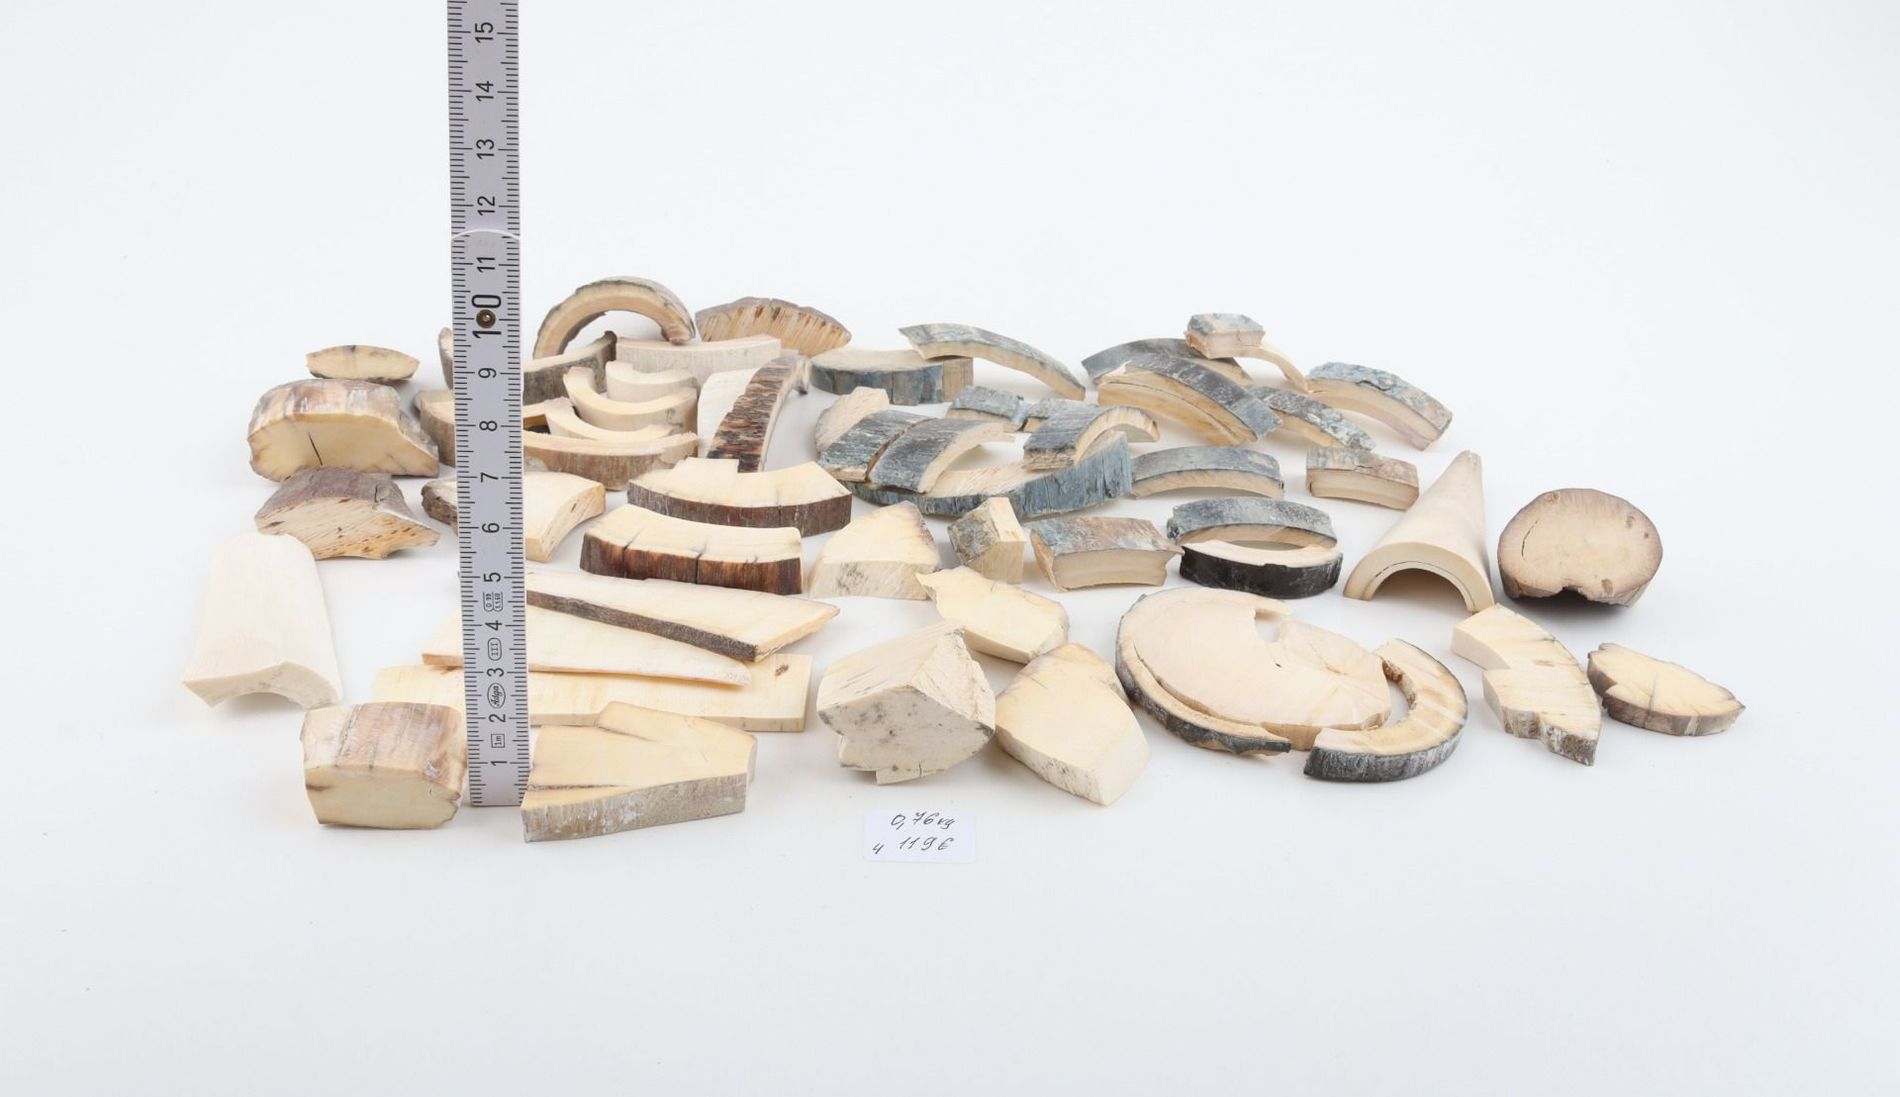 Raw mammoth ivory pieces